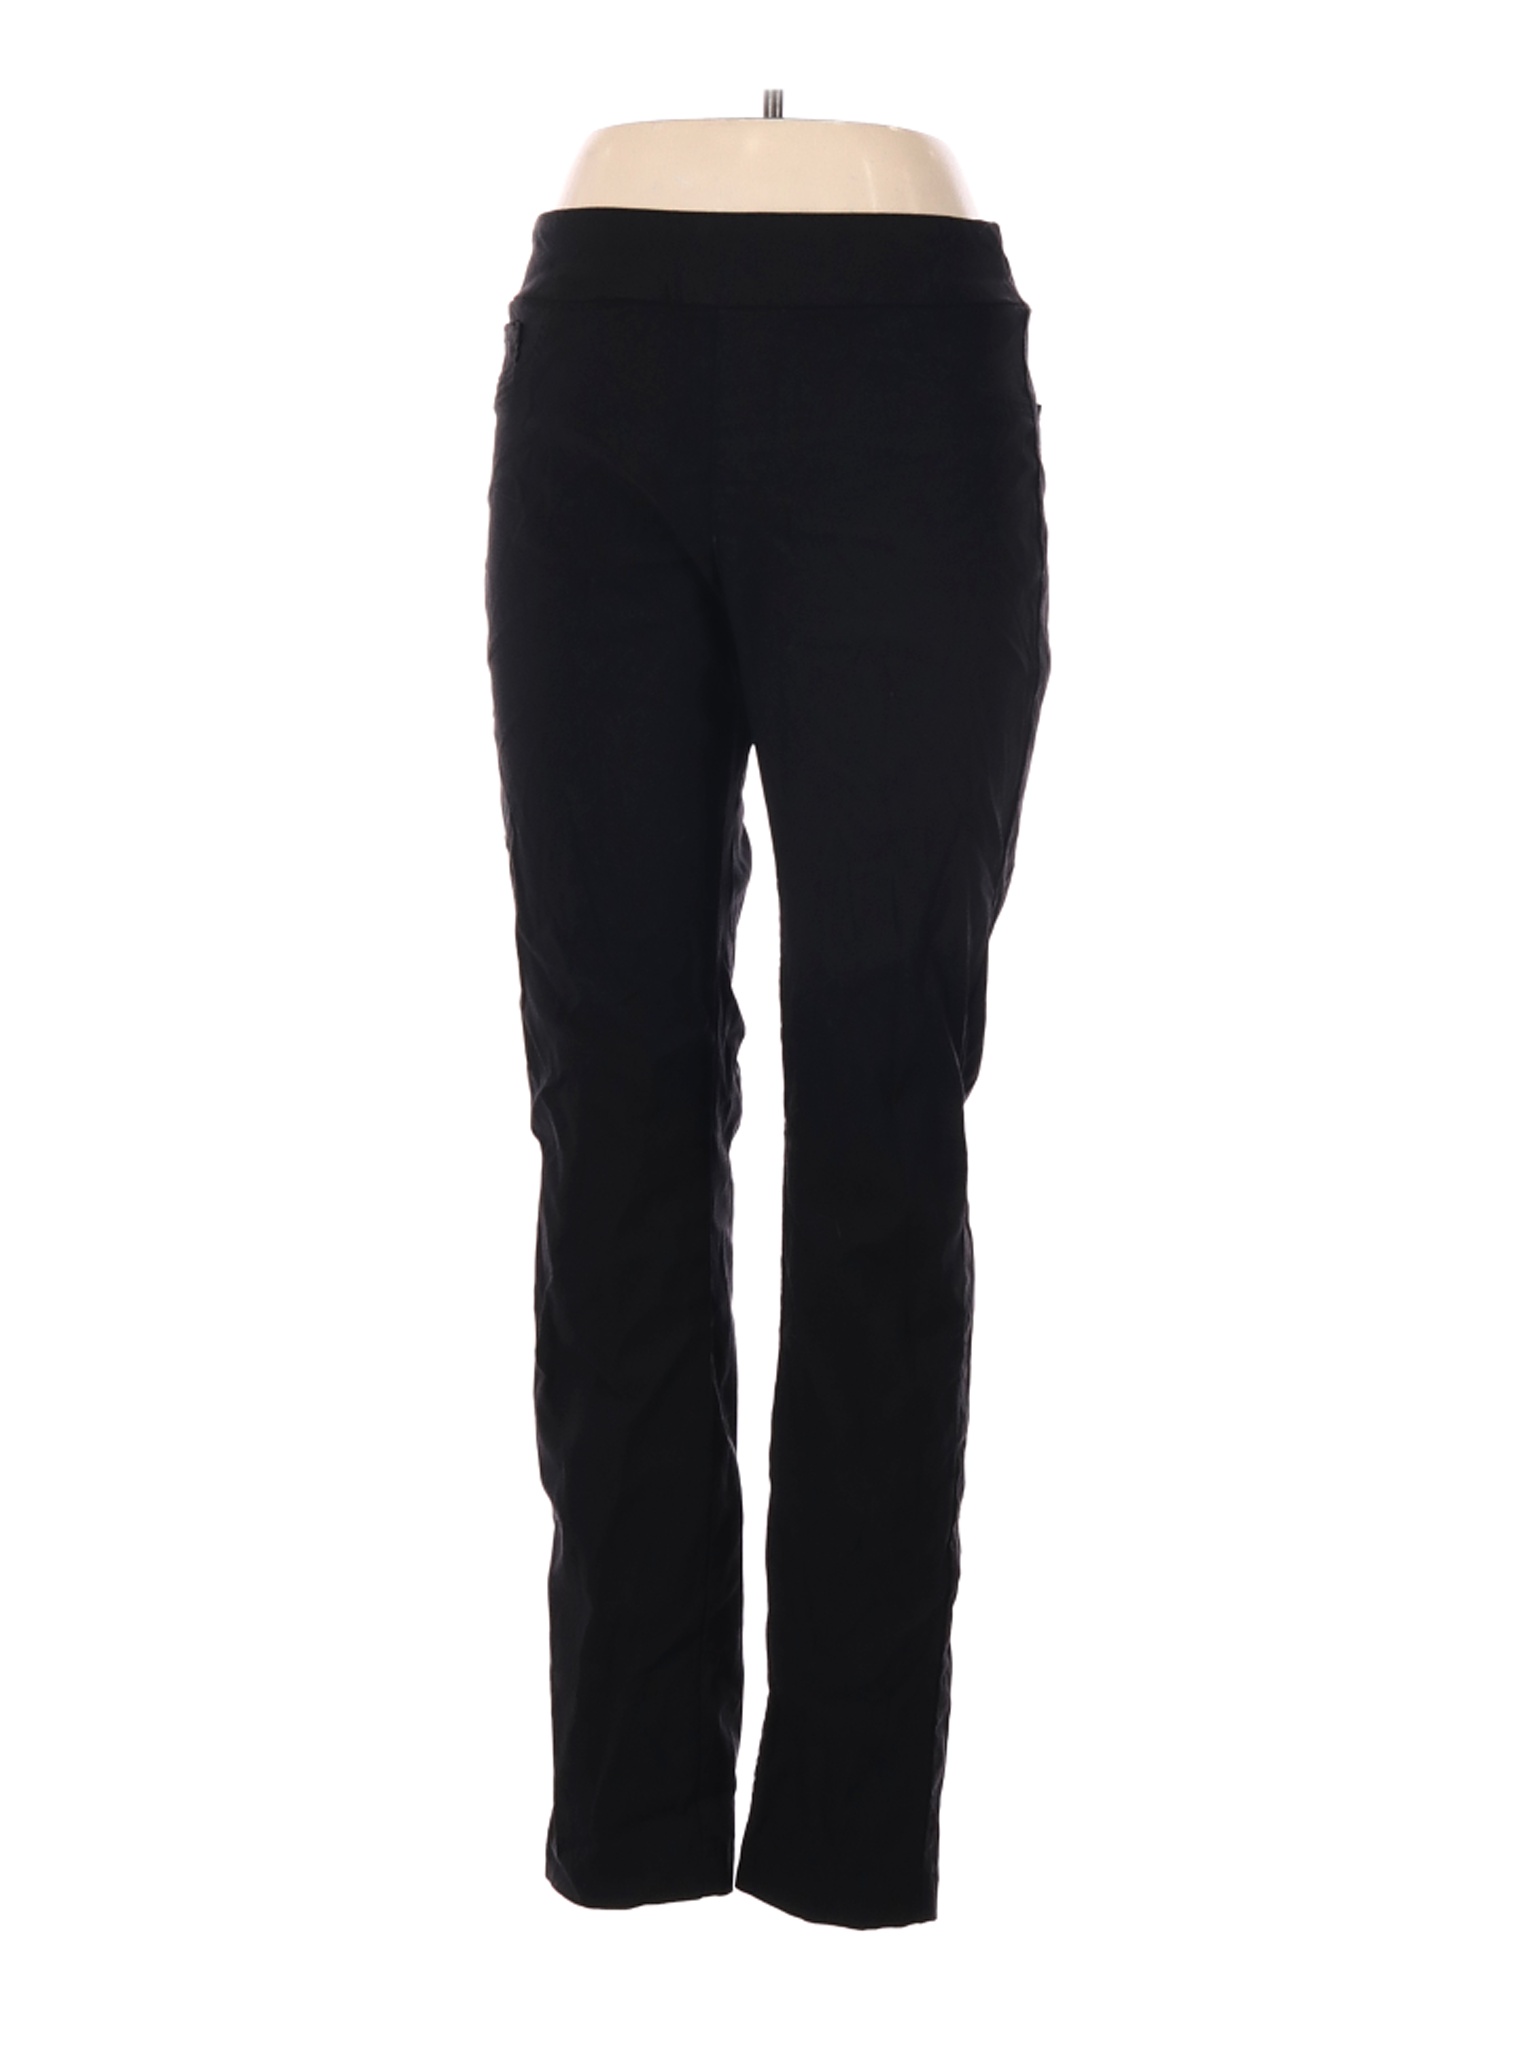 Euro Classic Women Black Casual Pants 10 | eBay